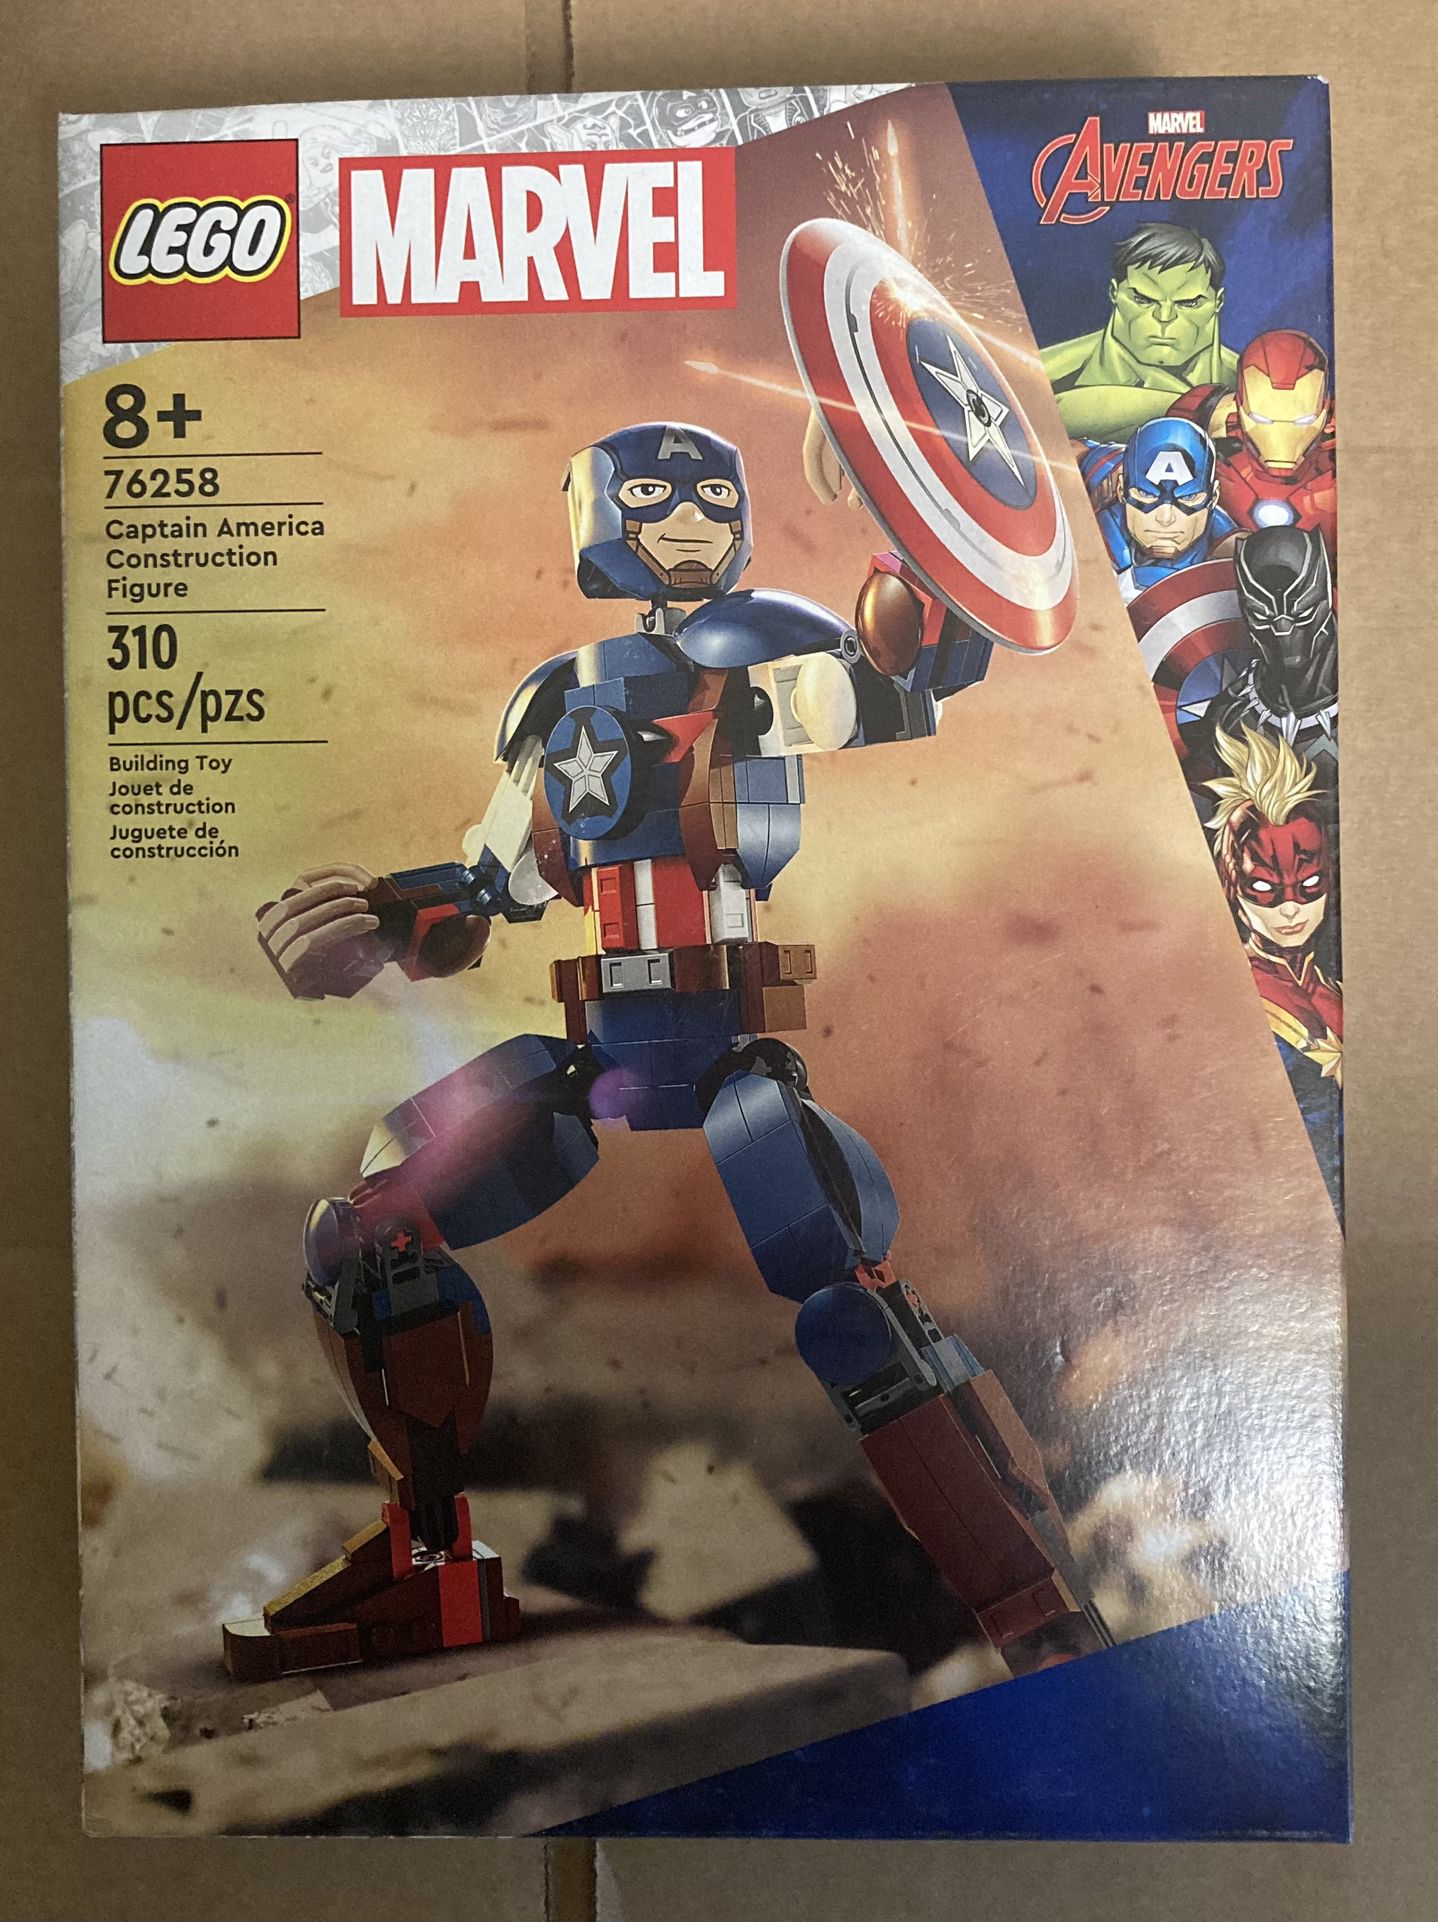 LEGO 76258 Marvel Captain America Construction Figure